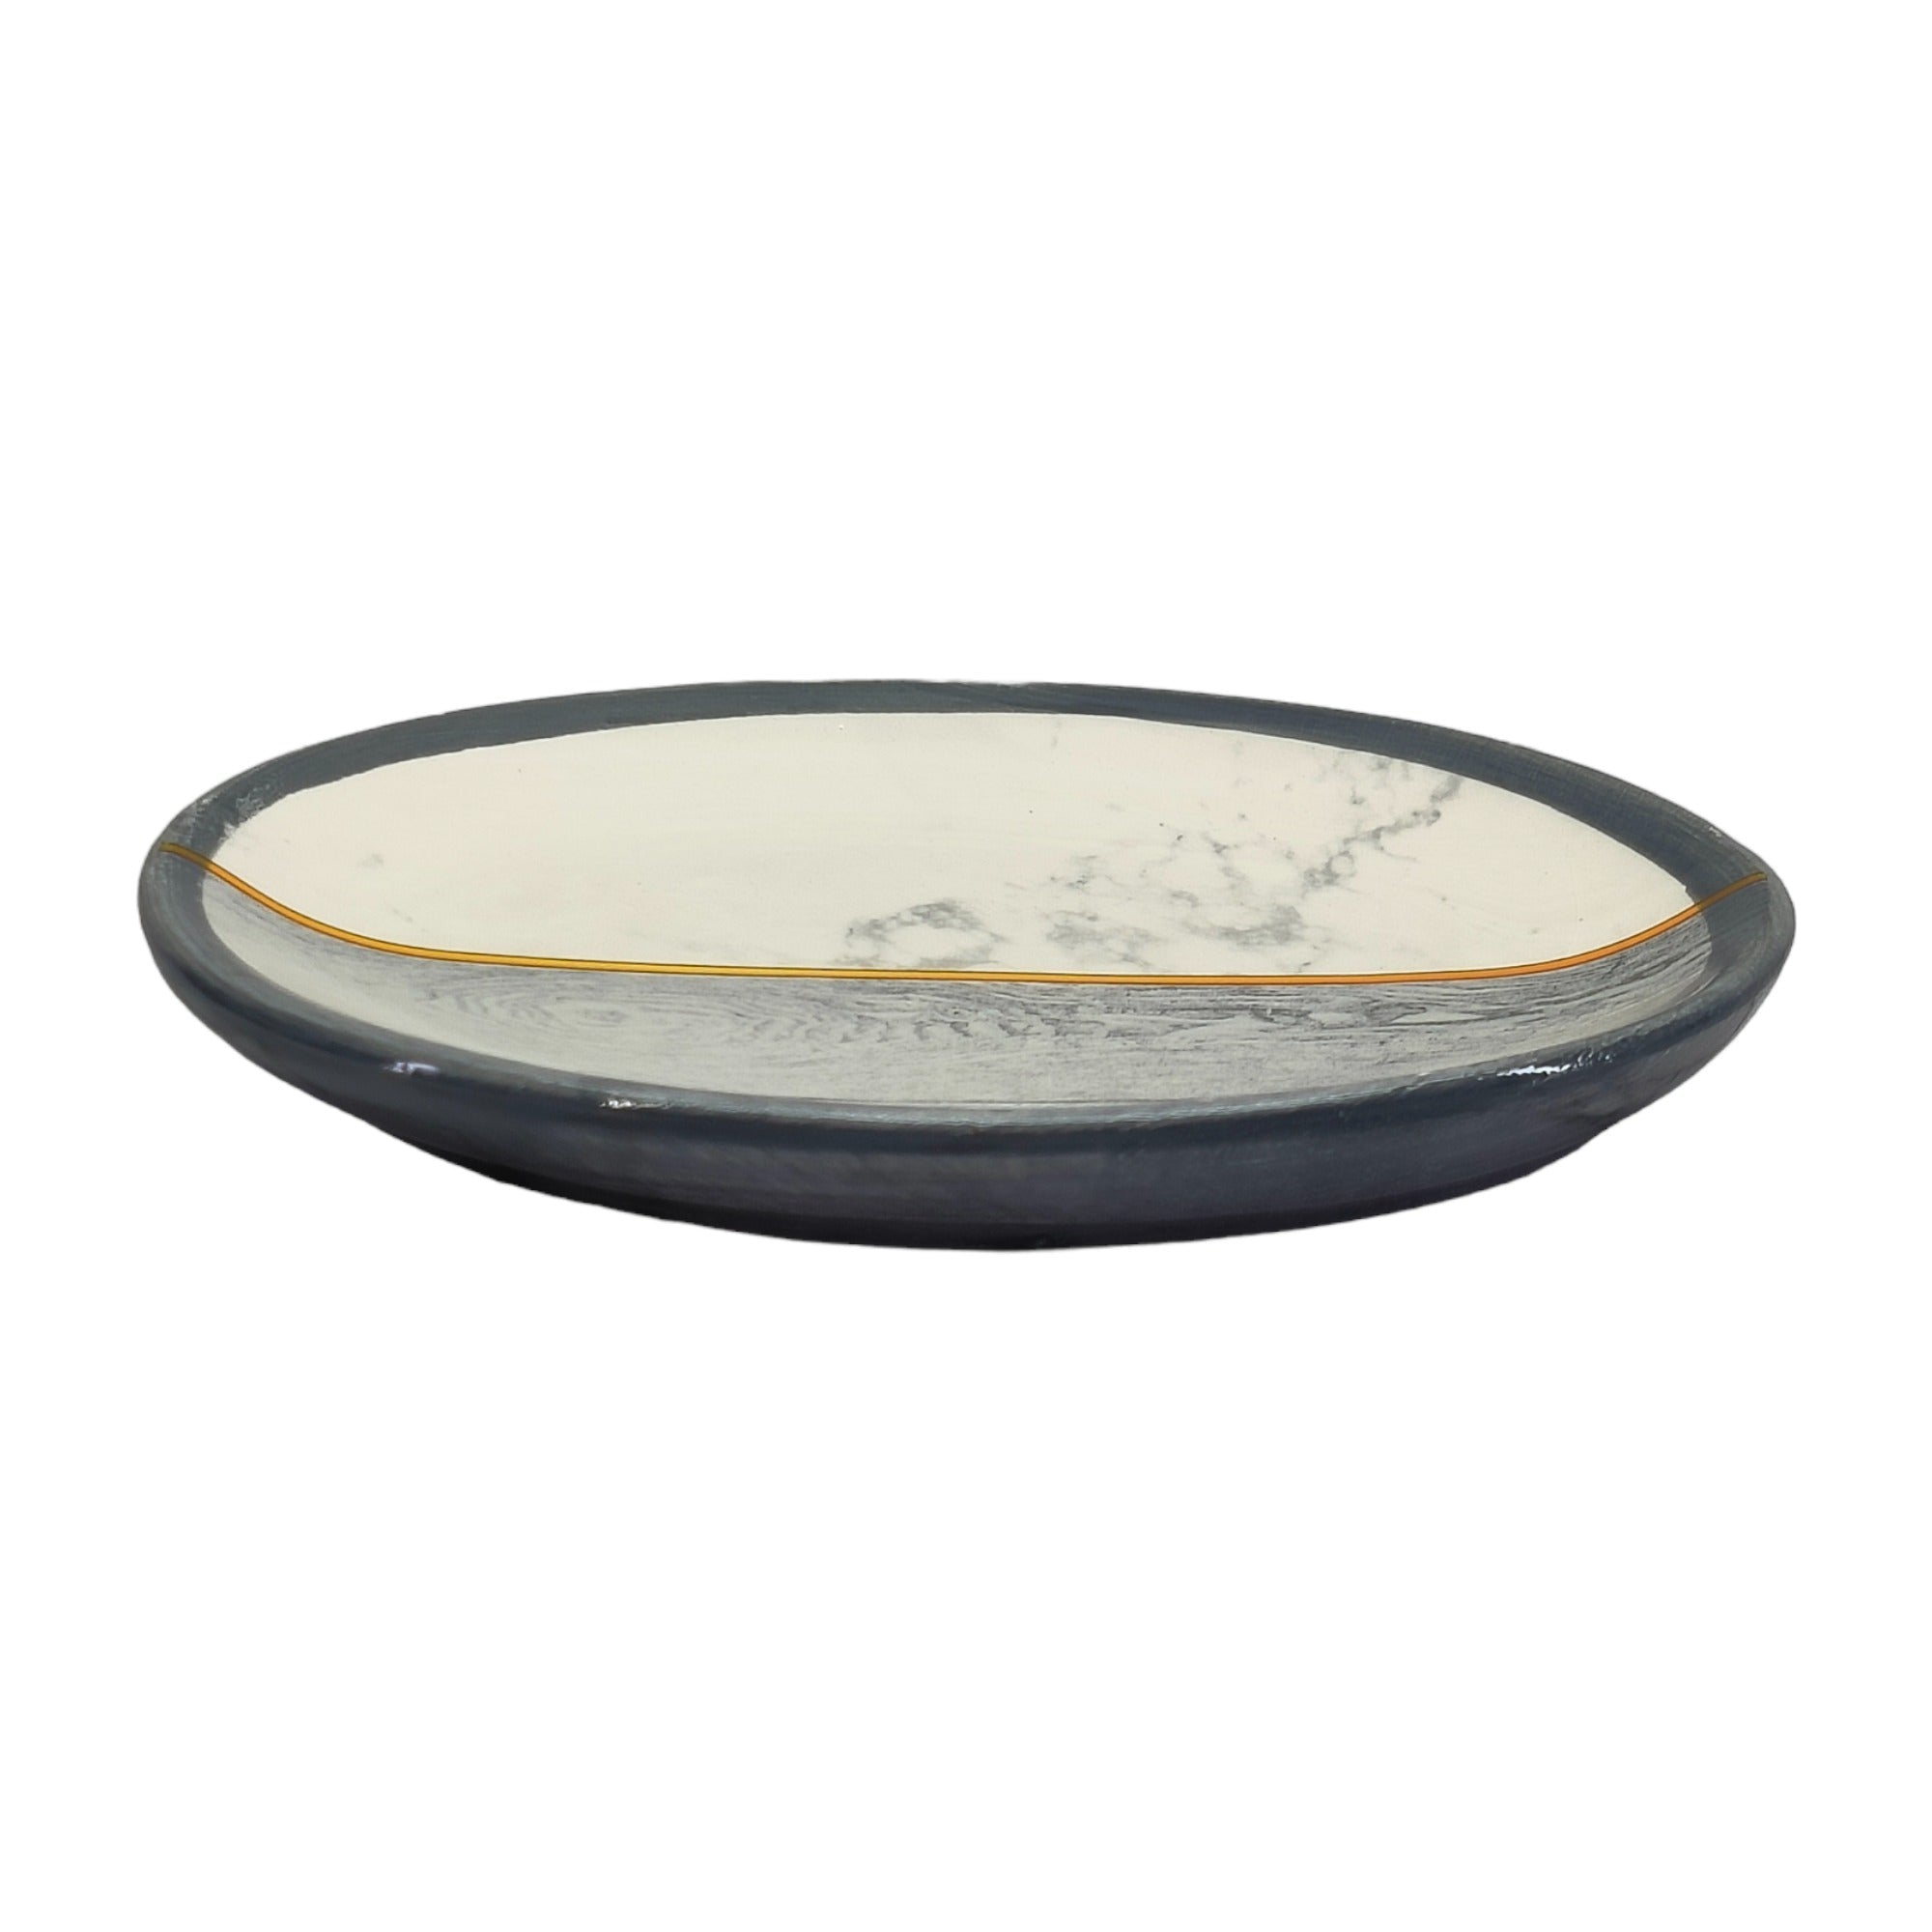 Ceramic Soap Dish Set of 1 Bathroom Accessories for Home (C1063)